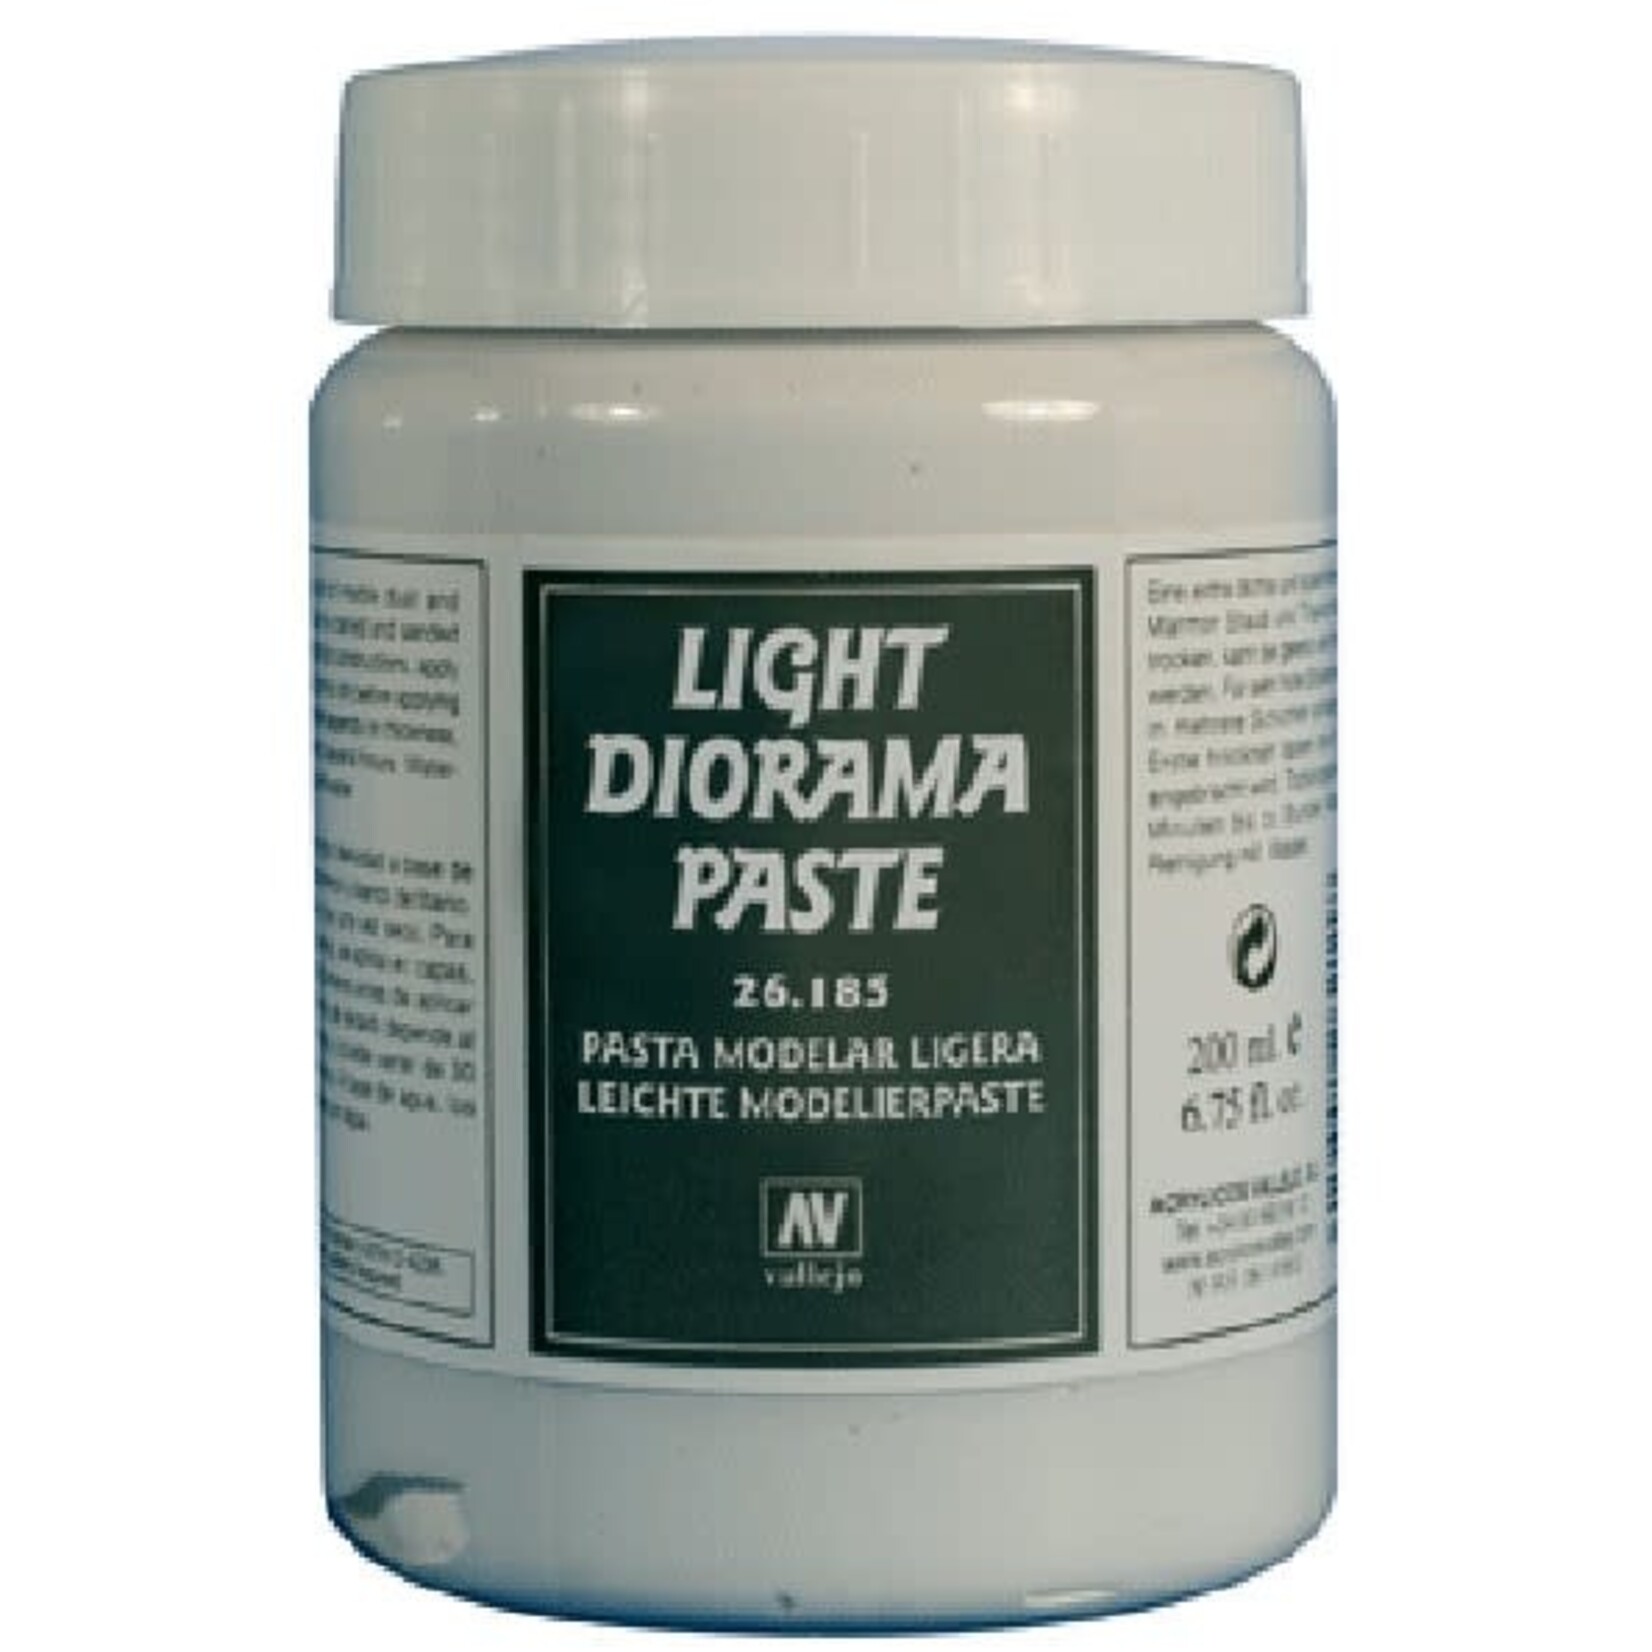 Light Diorama Paste